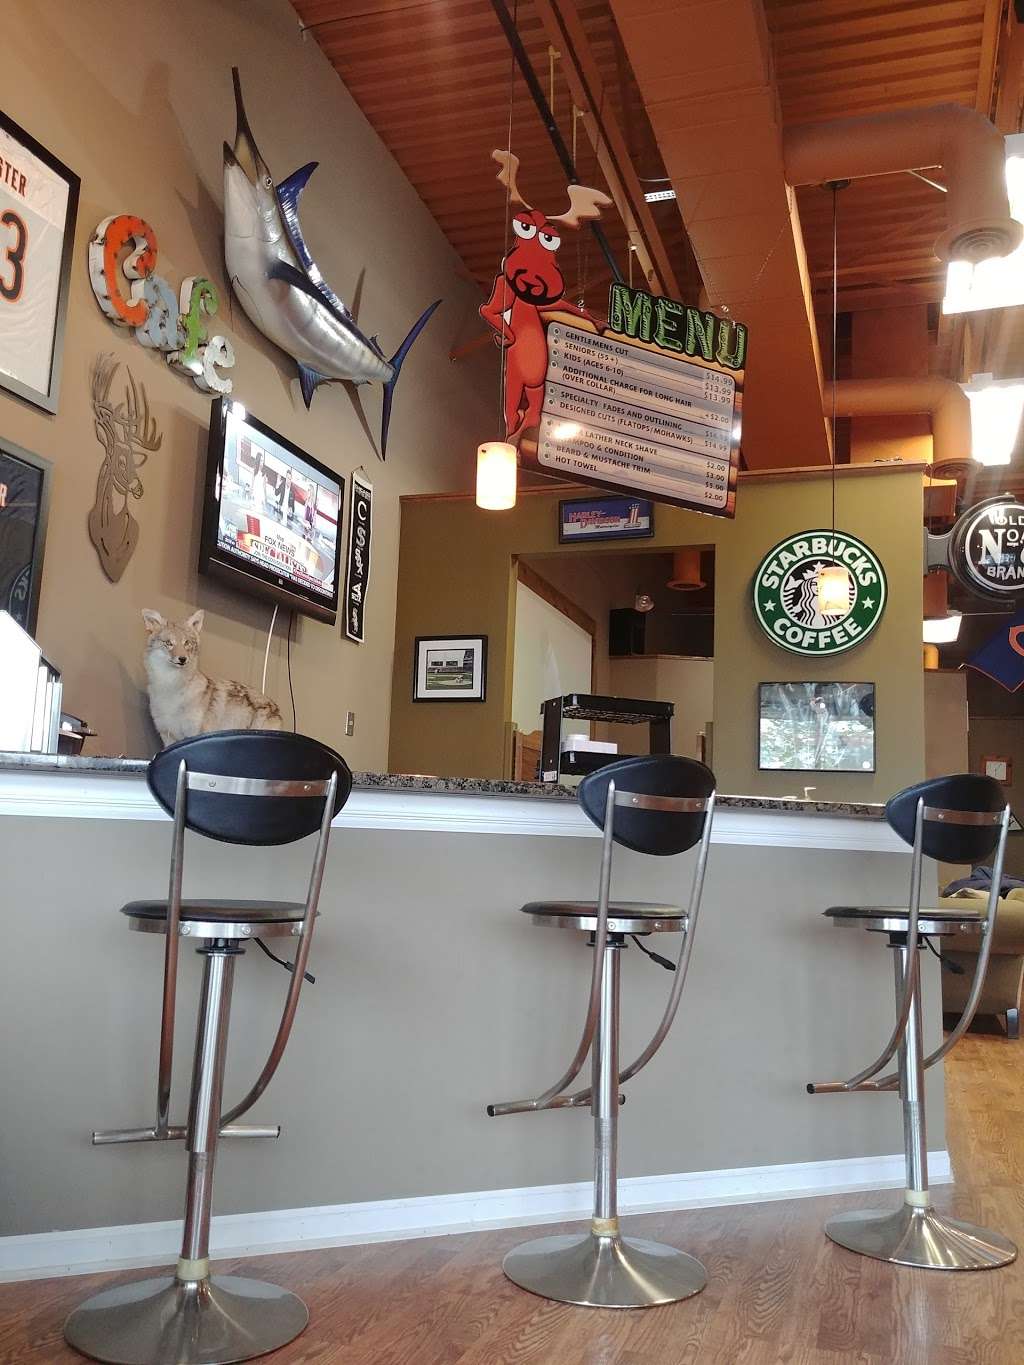 Sports Lodge Barber Shop | 2013 Essington Rd, Joliet, IL 60435 | Phone: (815) 814-6000